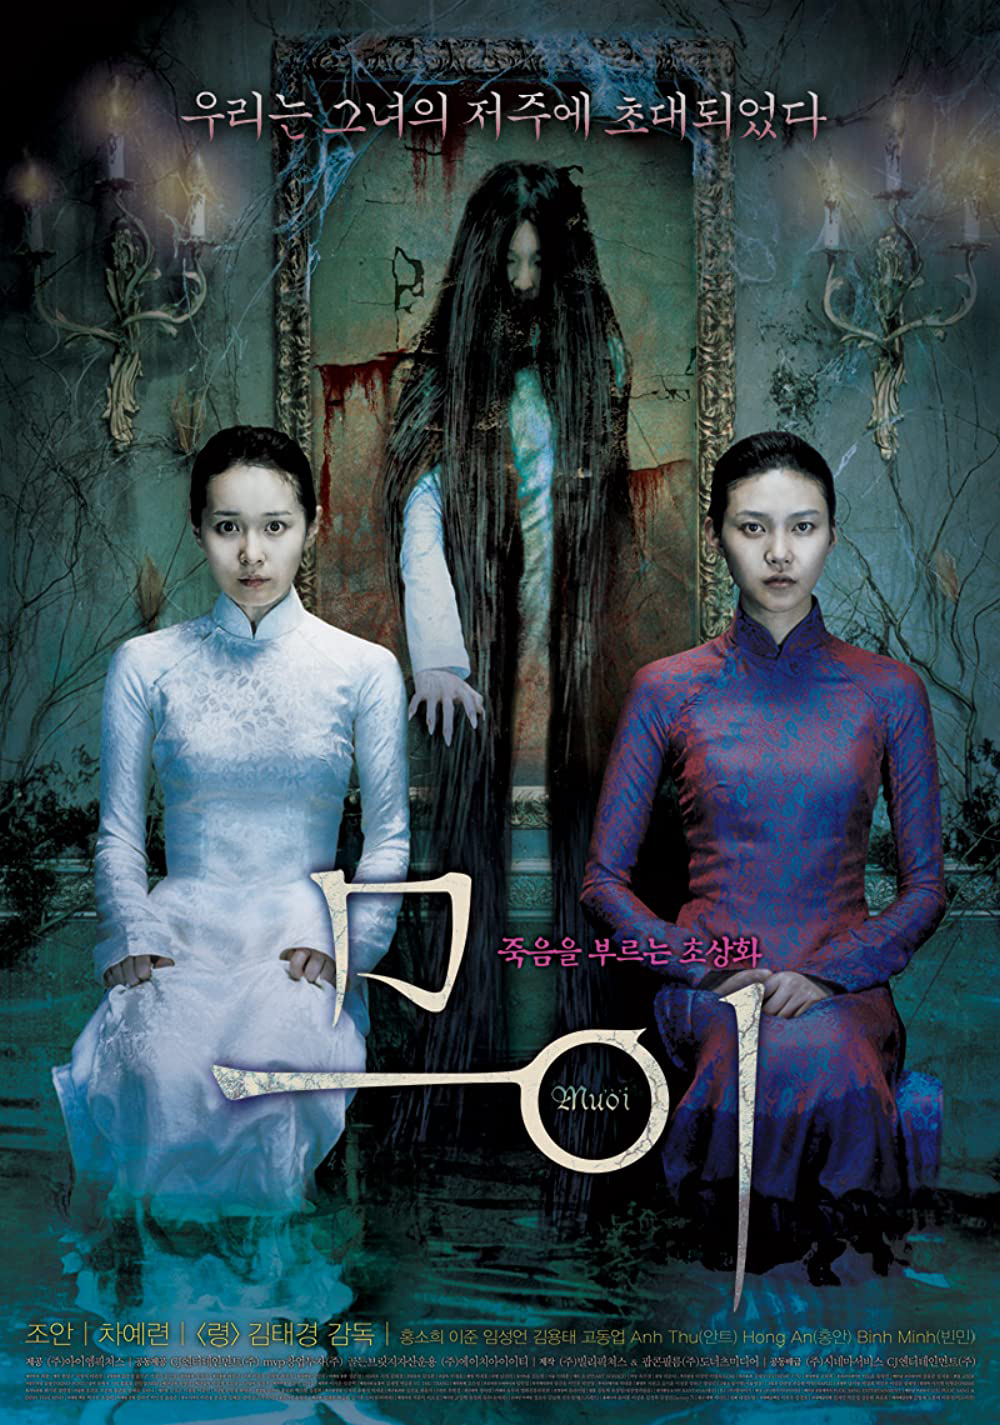 Poster Phim Mười (Muoi: The Legend Of A Portrait)